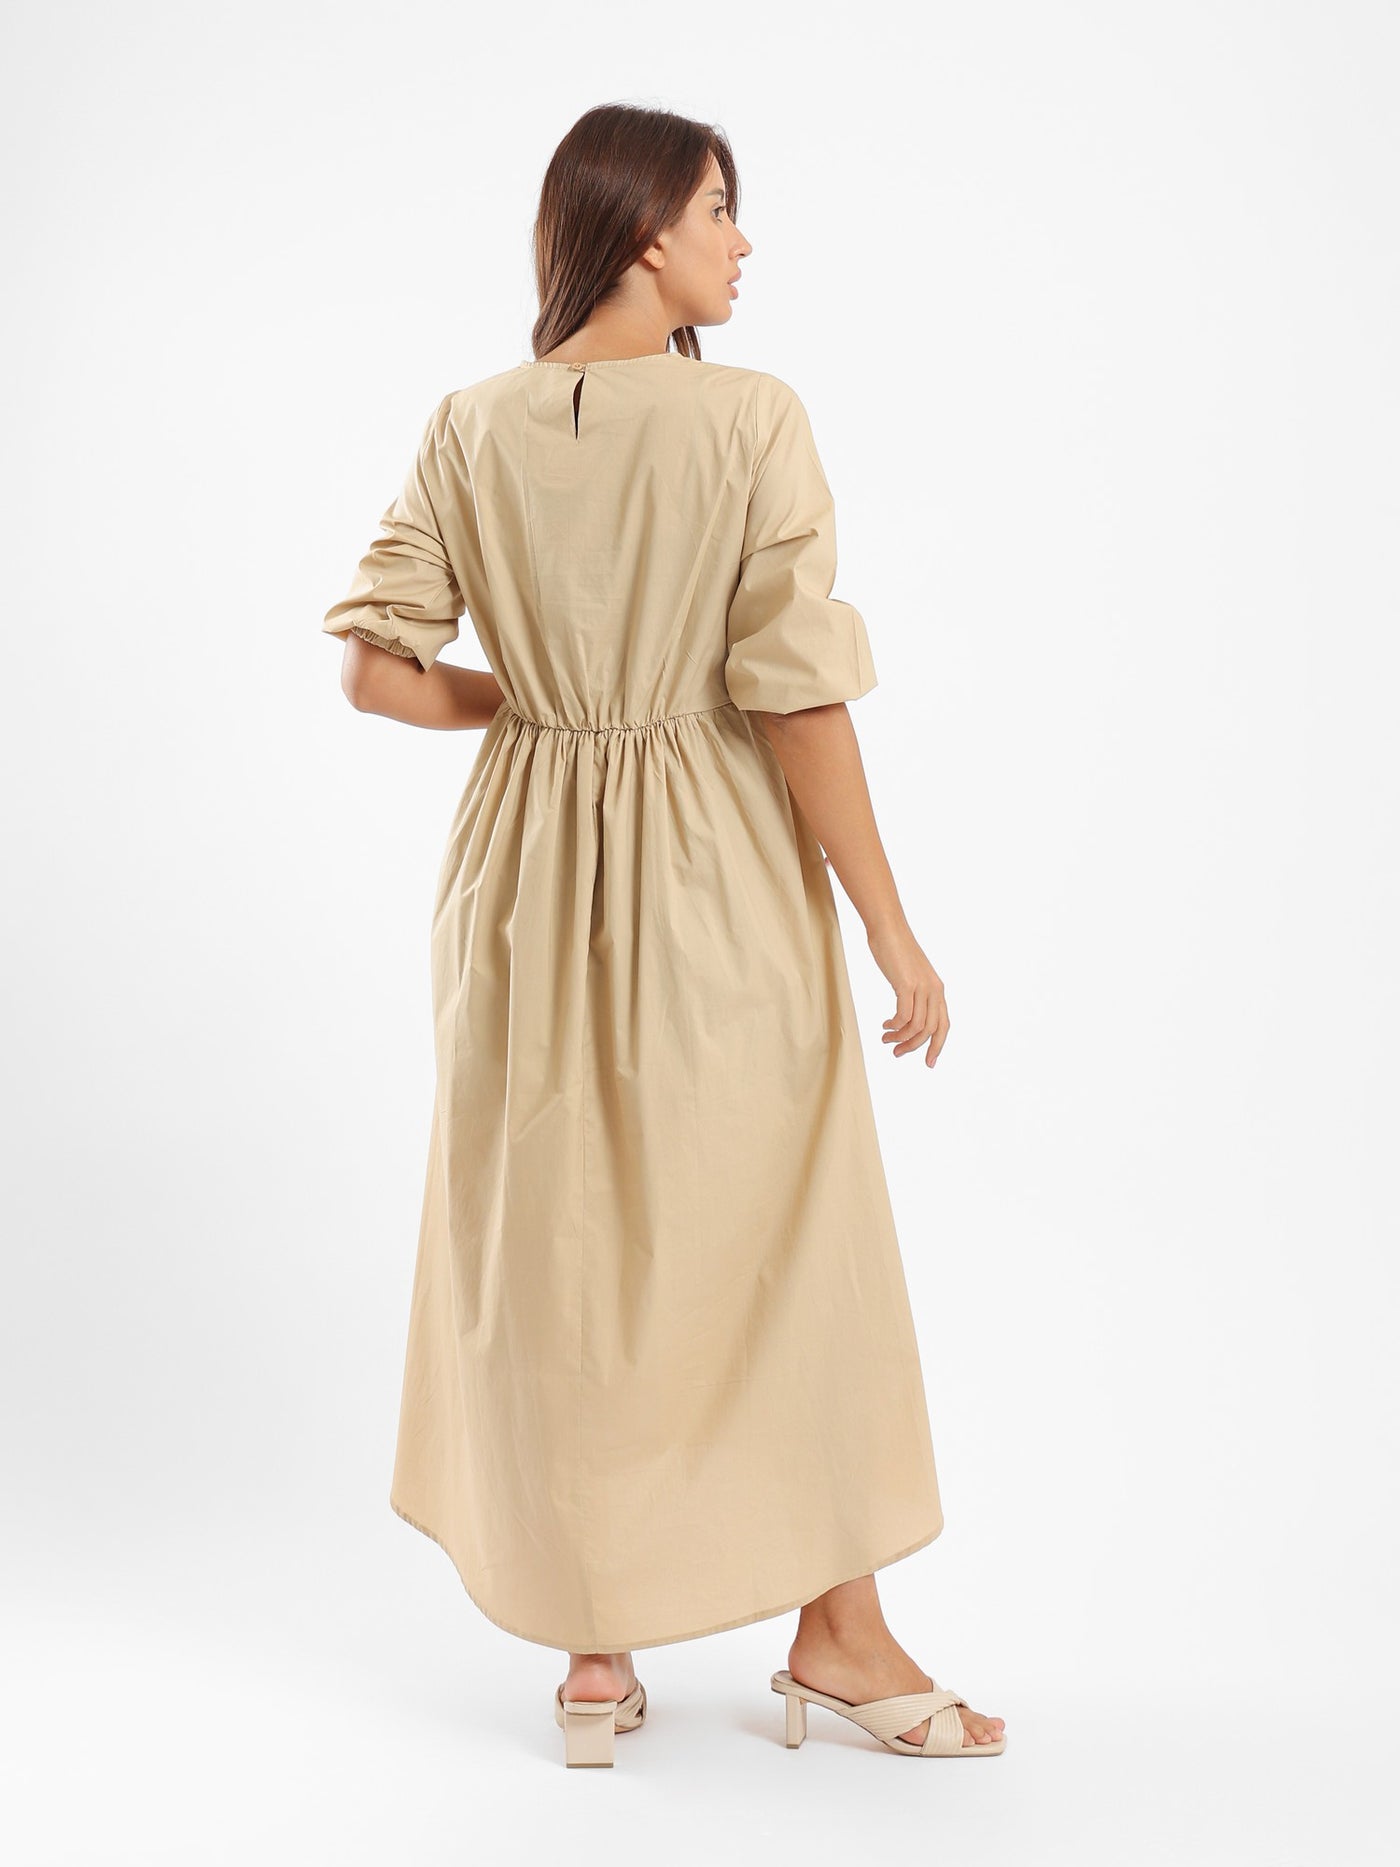 Dress - A-Line - Elasticated Waist